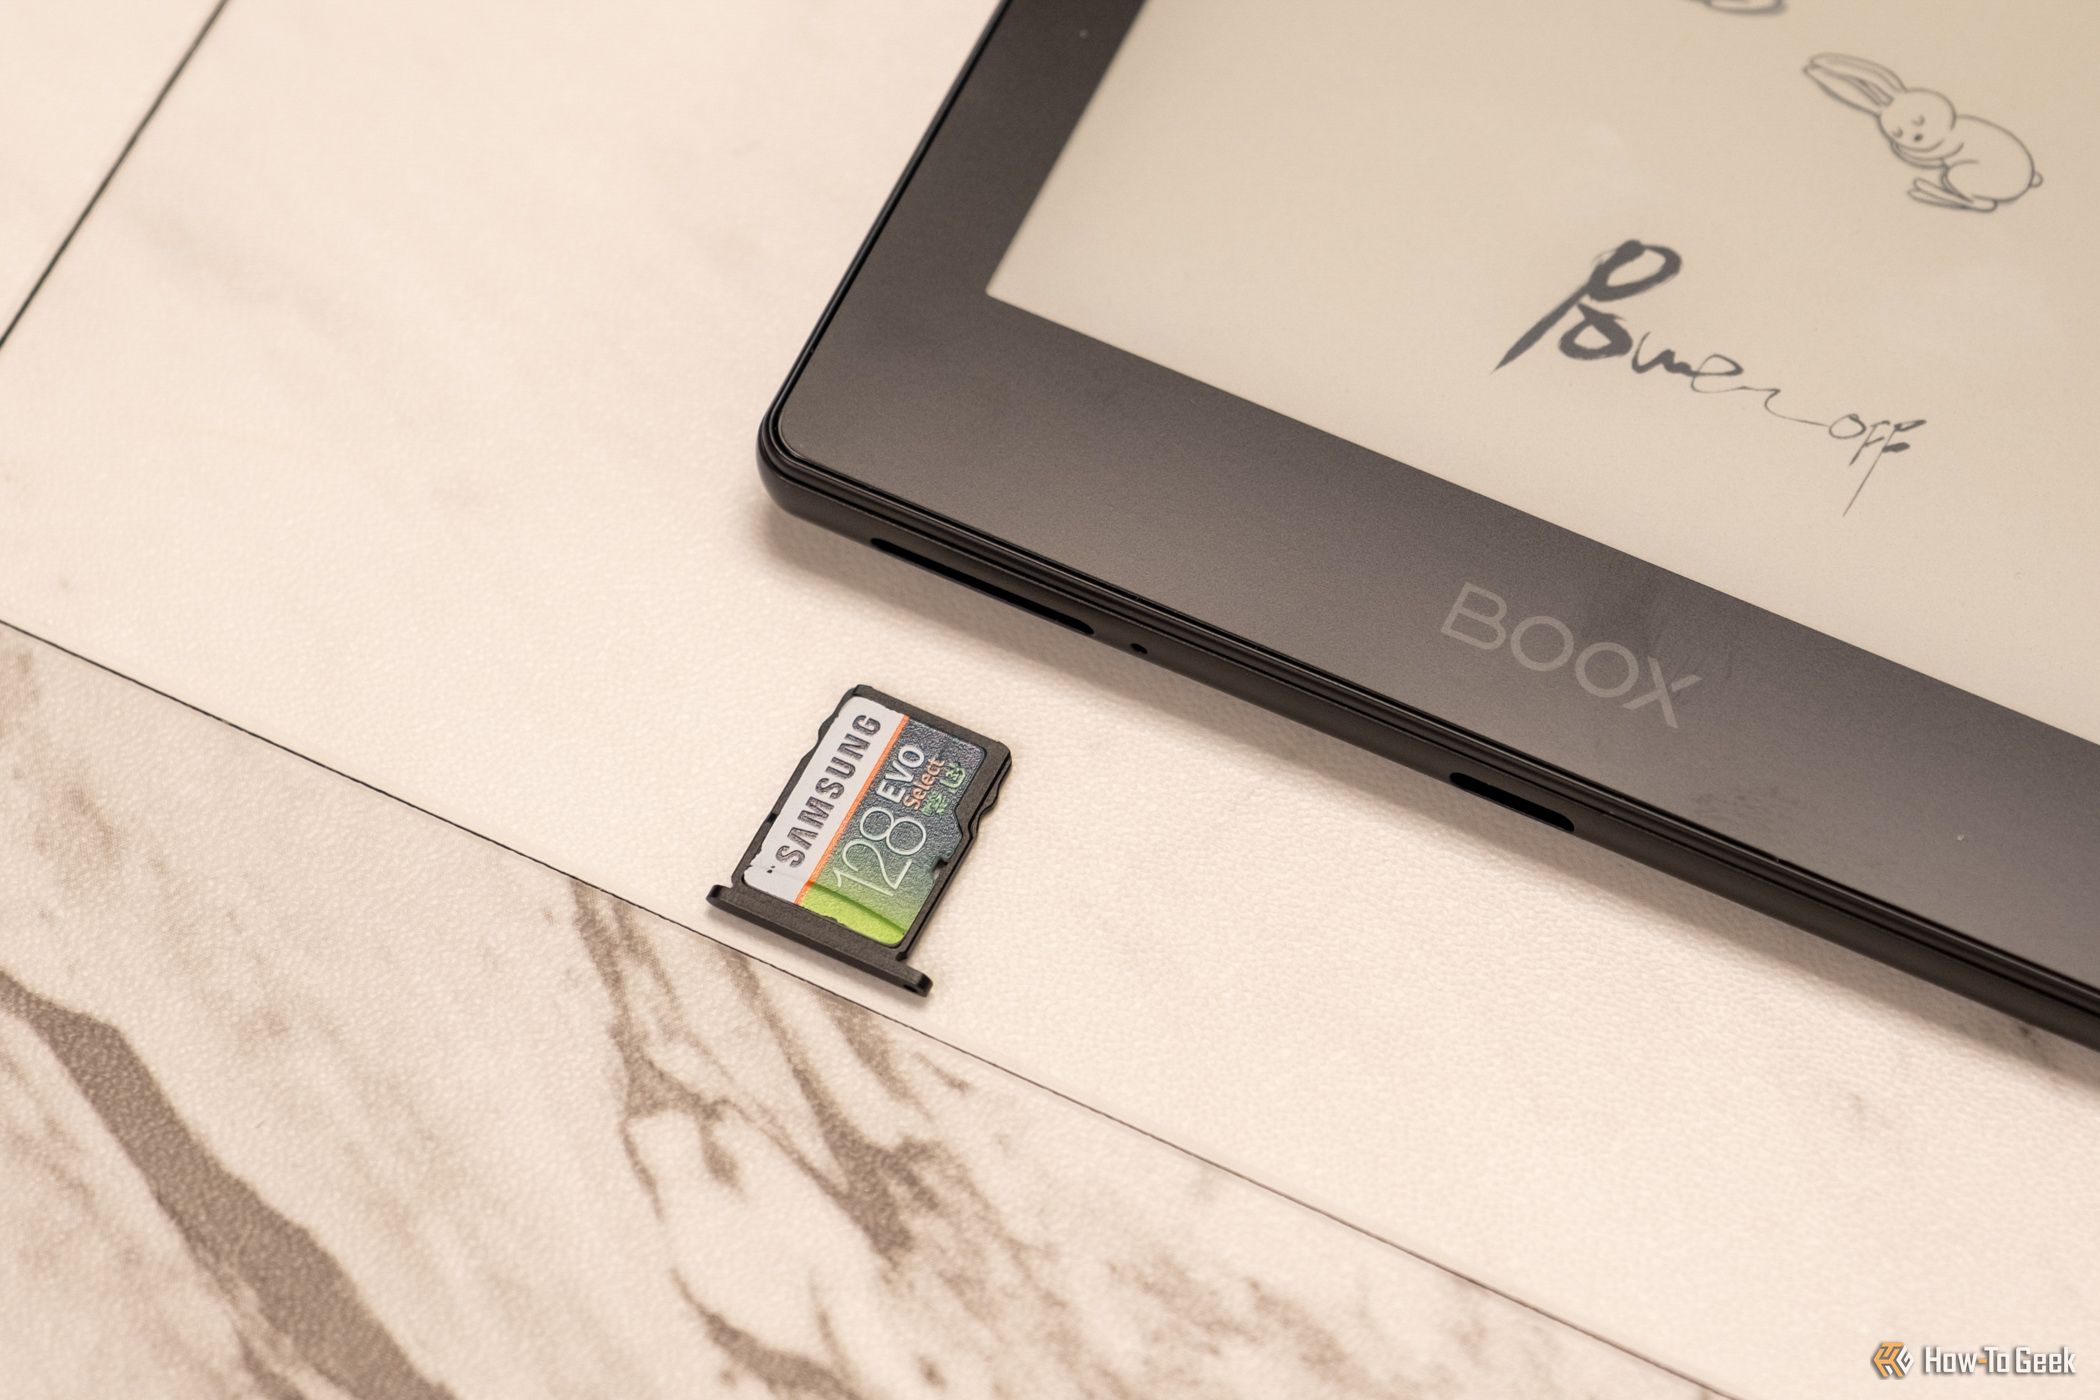 Inserting a microSD card in the Boox Poke 5.